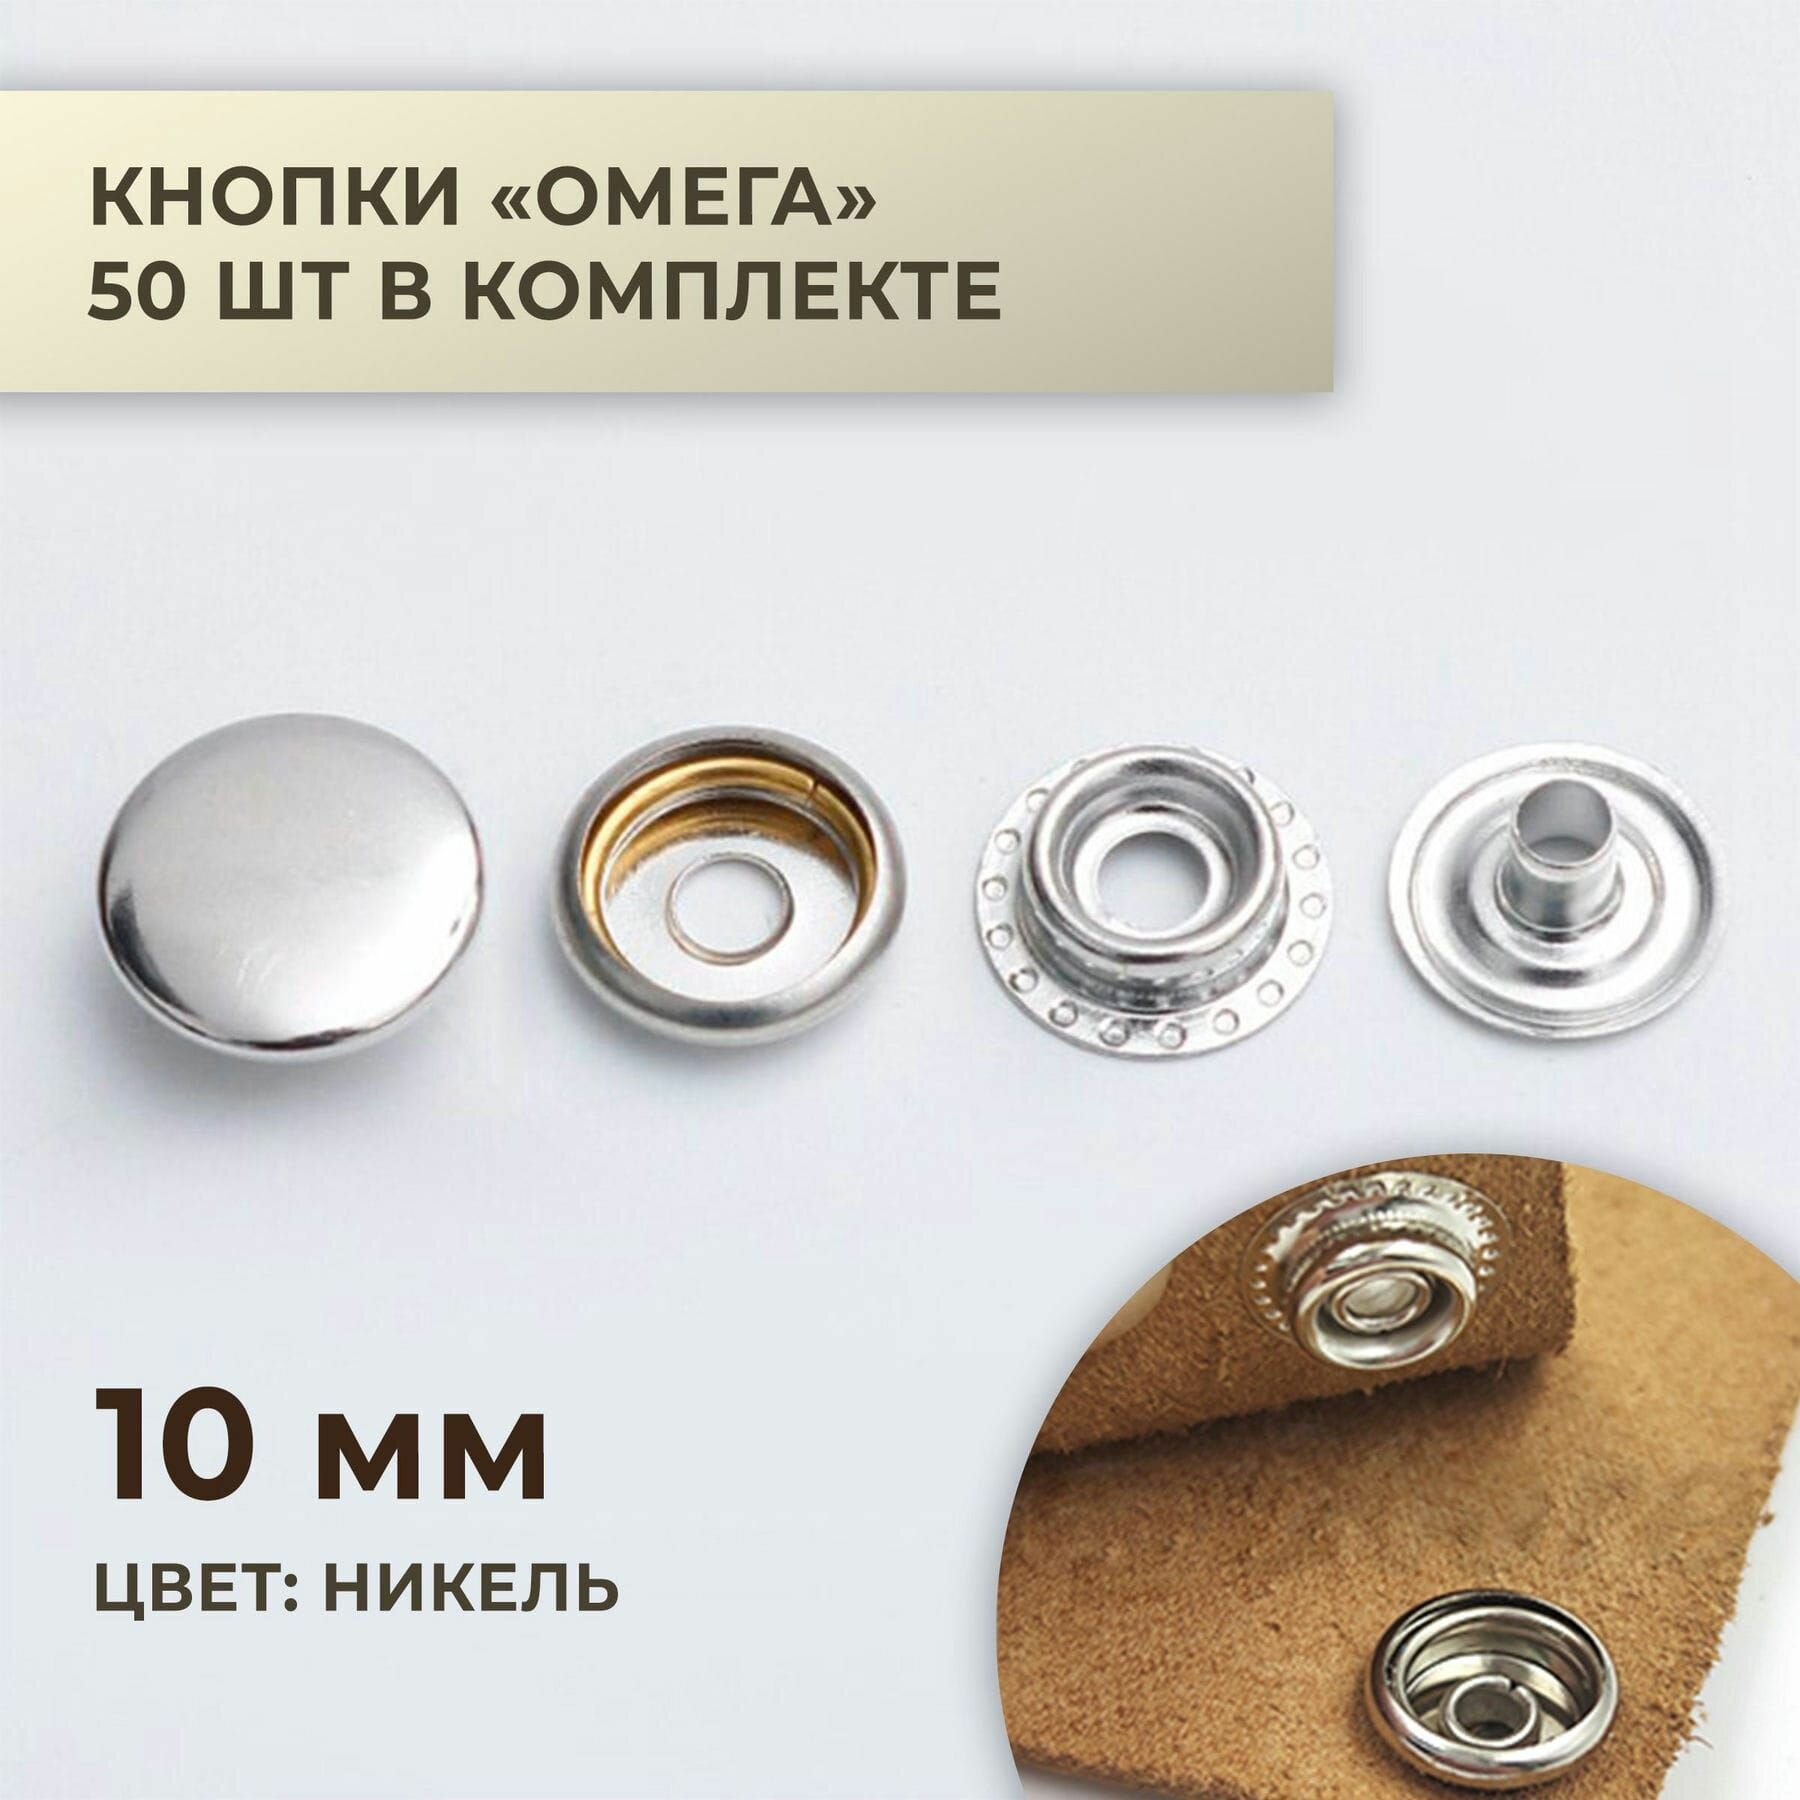 Кнопки "Омега", 10 мм, никель, 50 шт